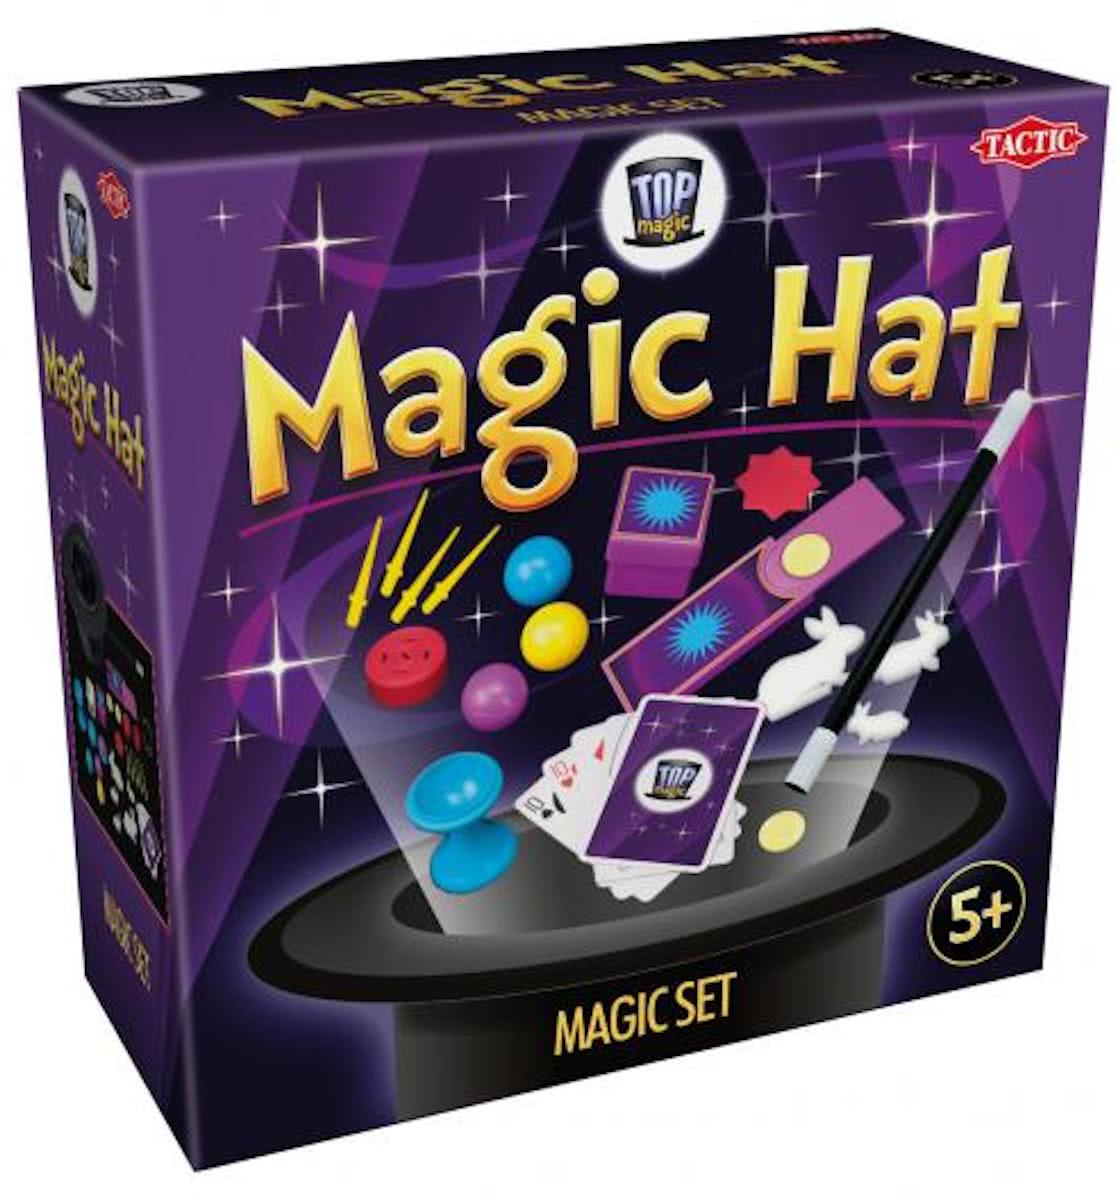 Top Magic Magic Hat Tricks